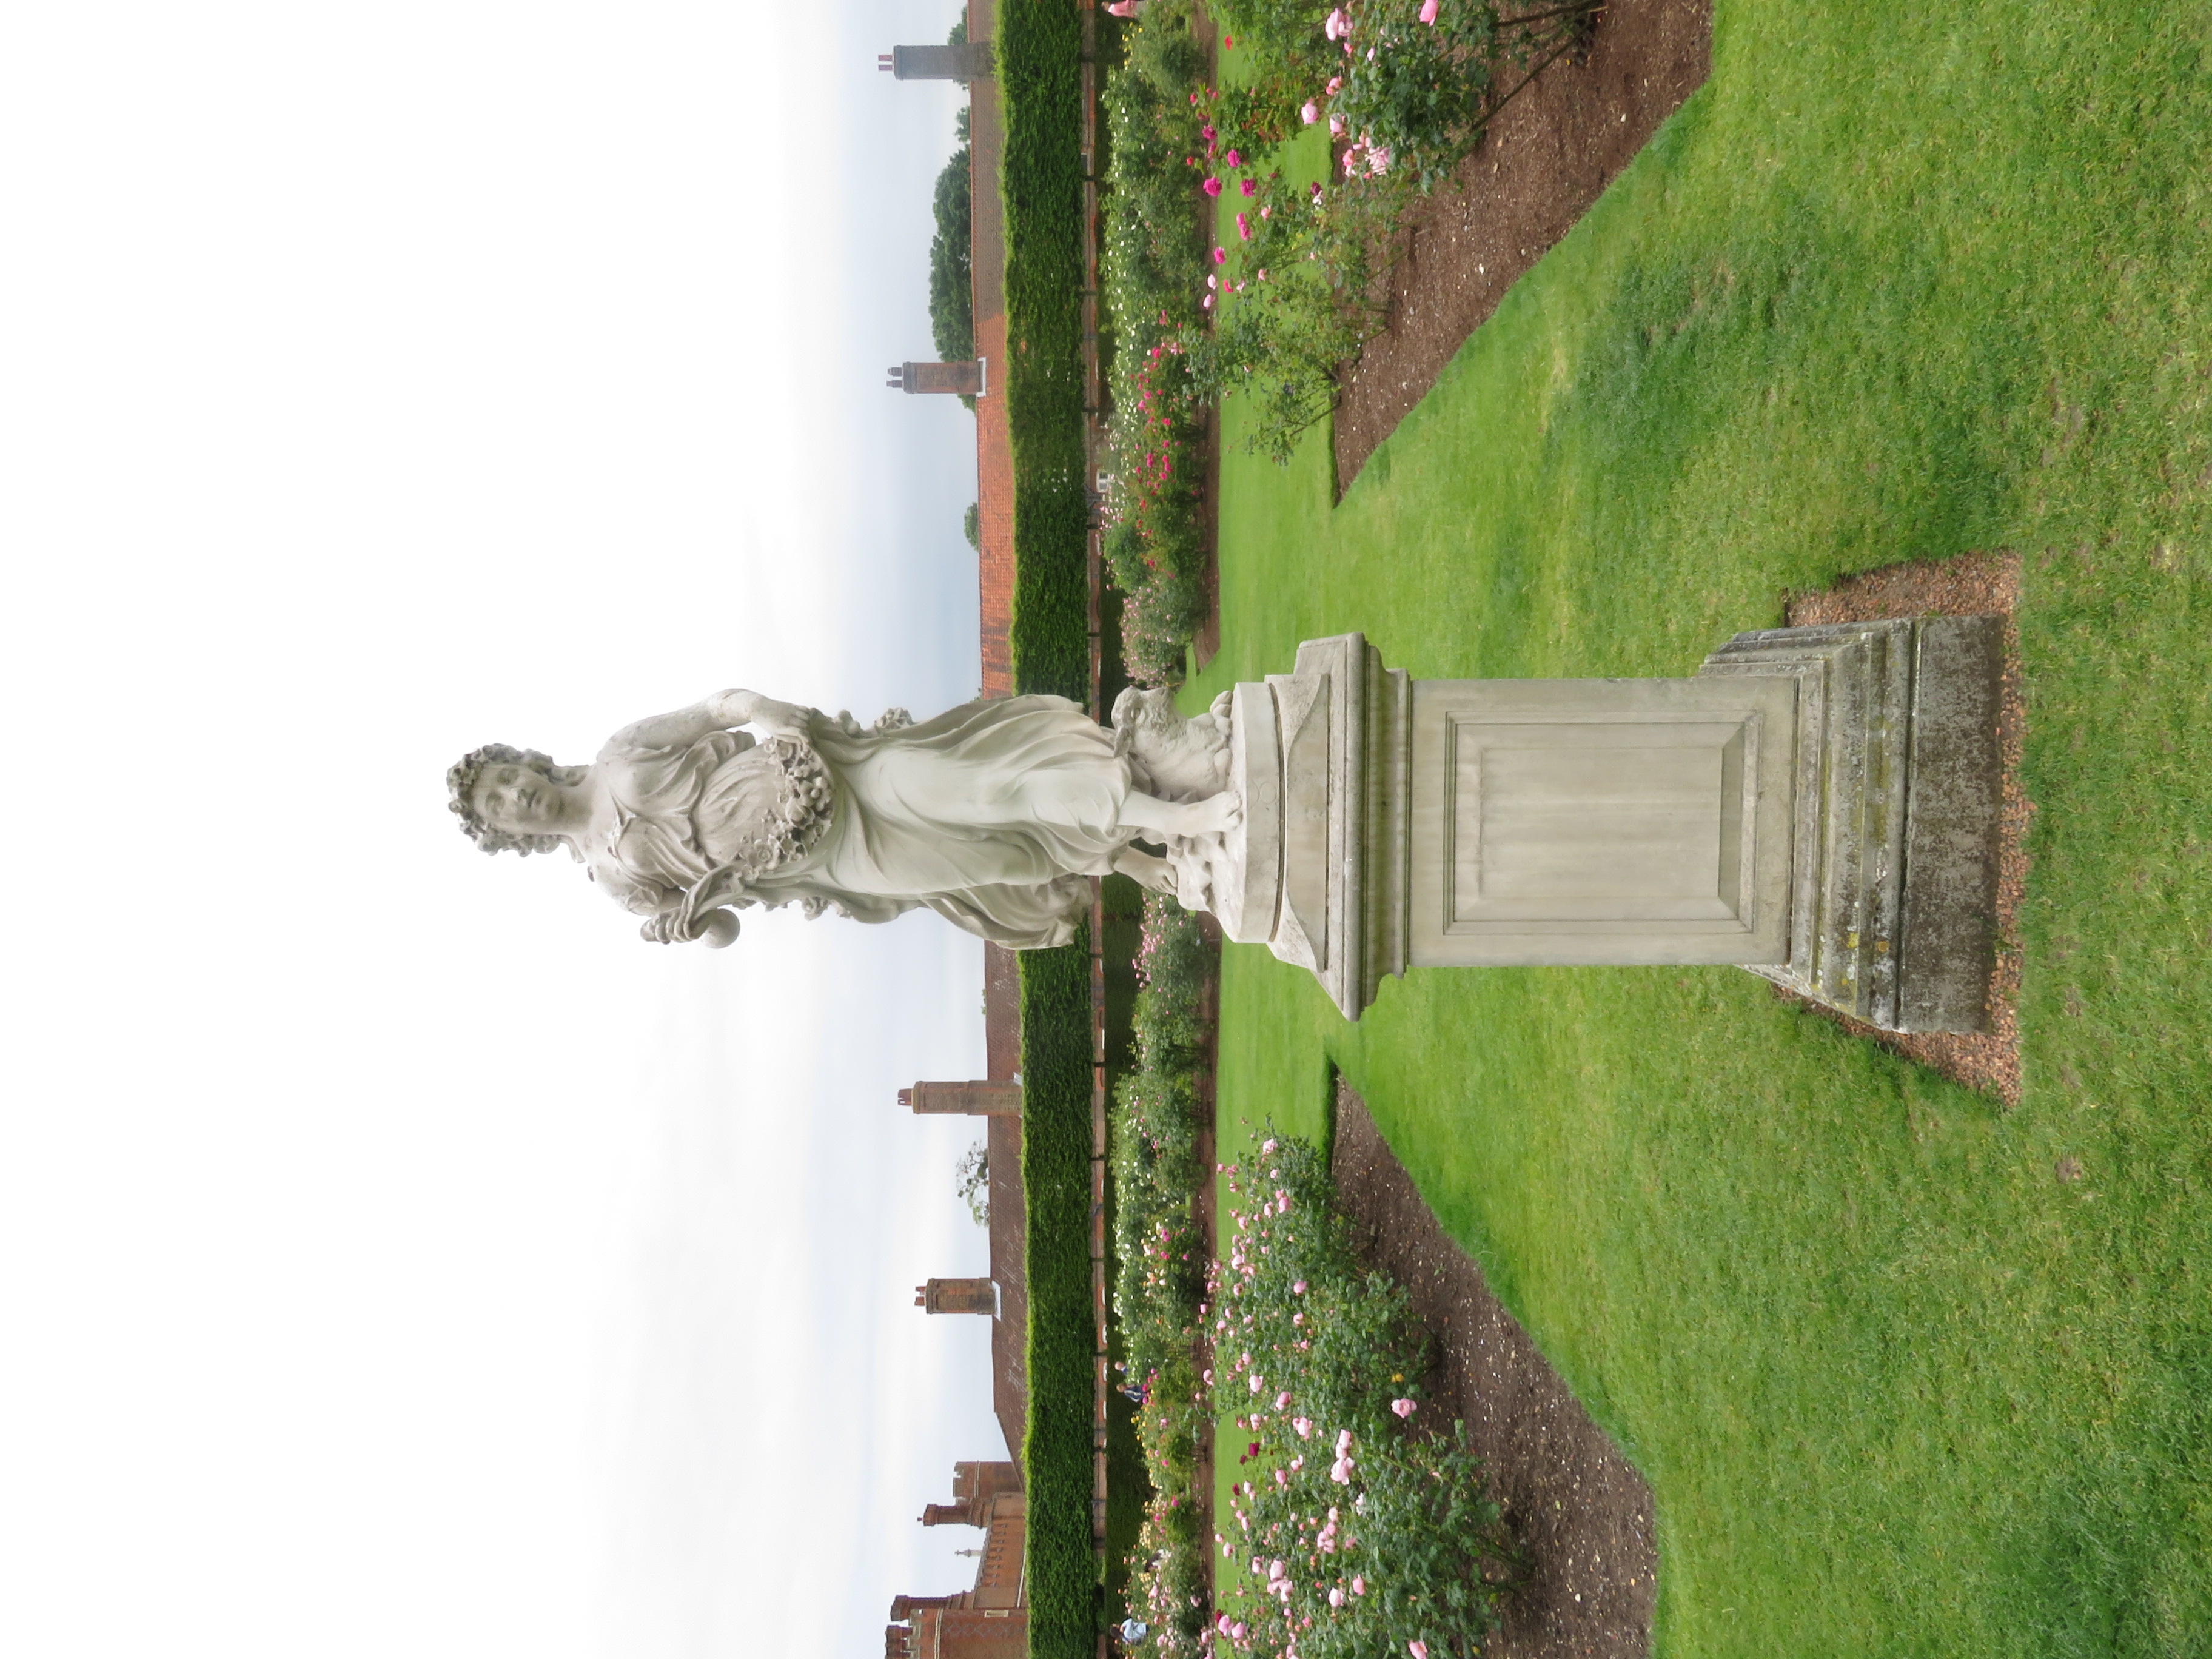 Statue in The Rose Garden